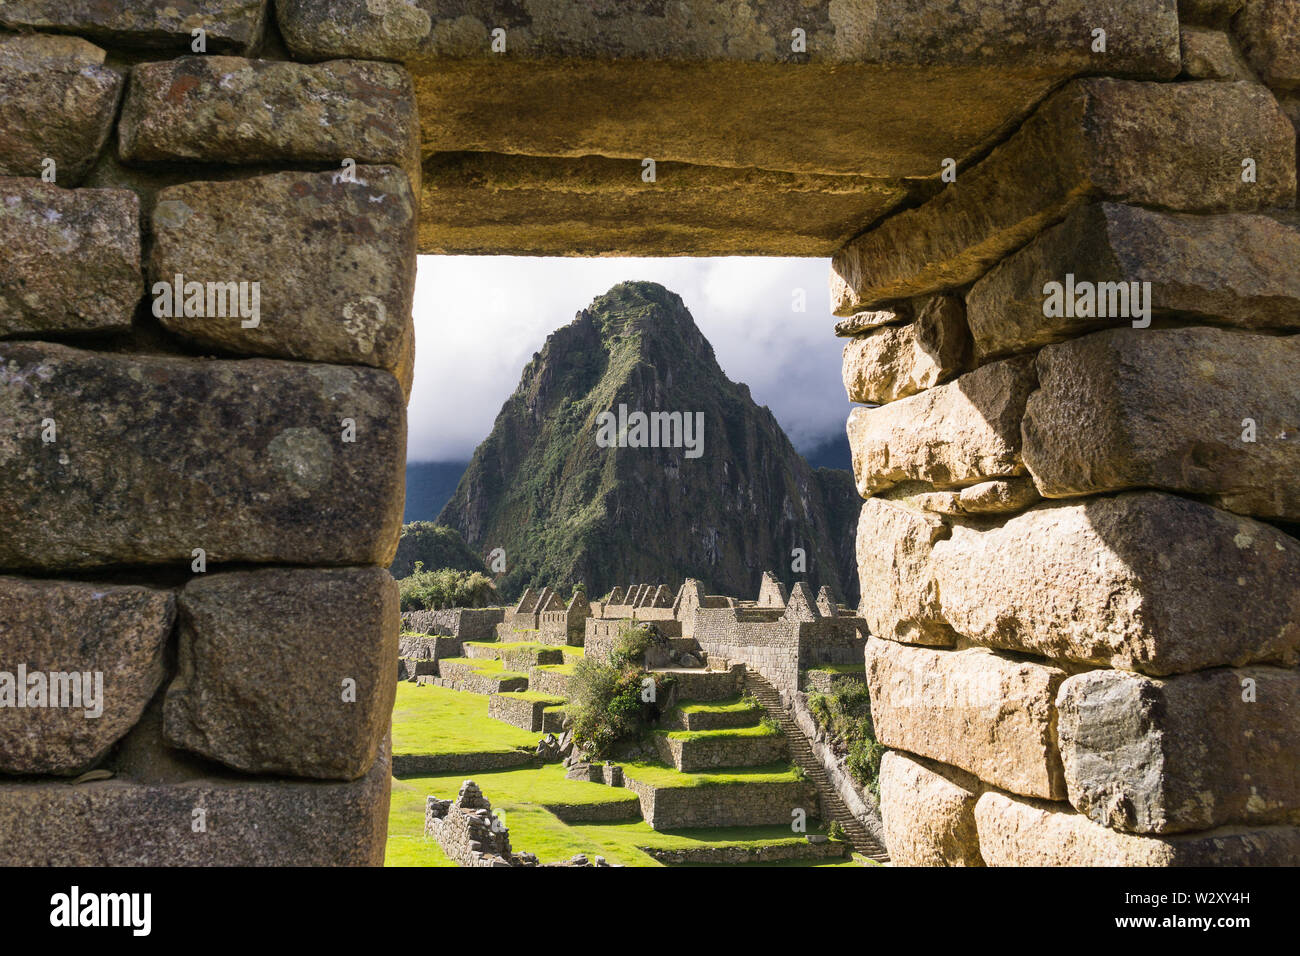 Machu Picchu Peru - Machu Picchu Zitadelle mit Blick auf den Huayna Picchu Berg in Peru, Südamerika. Stockfoto